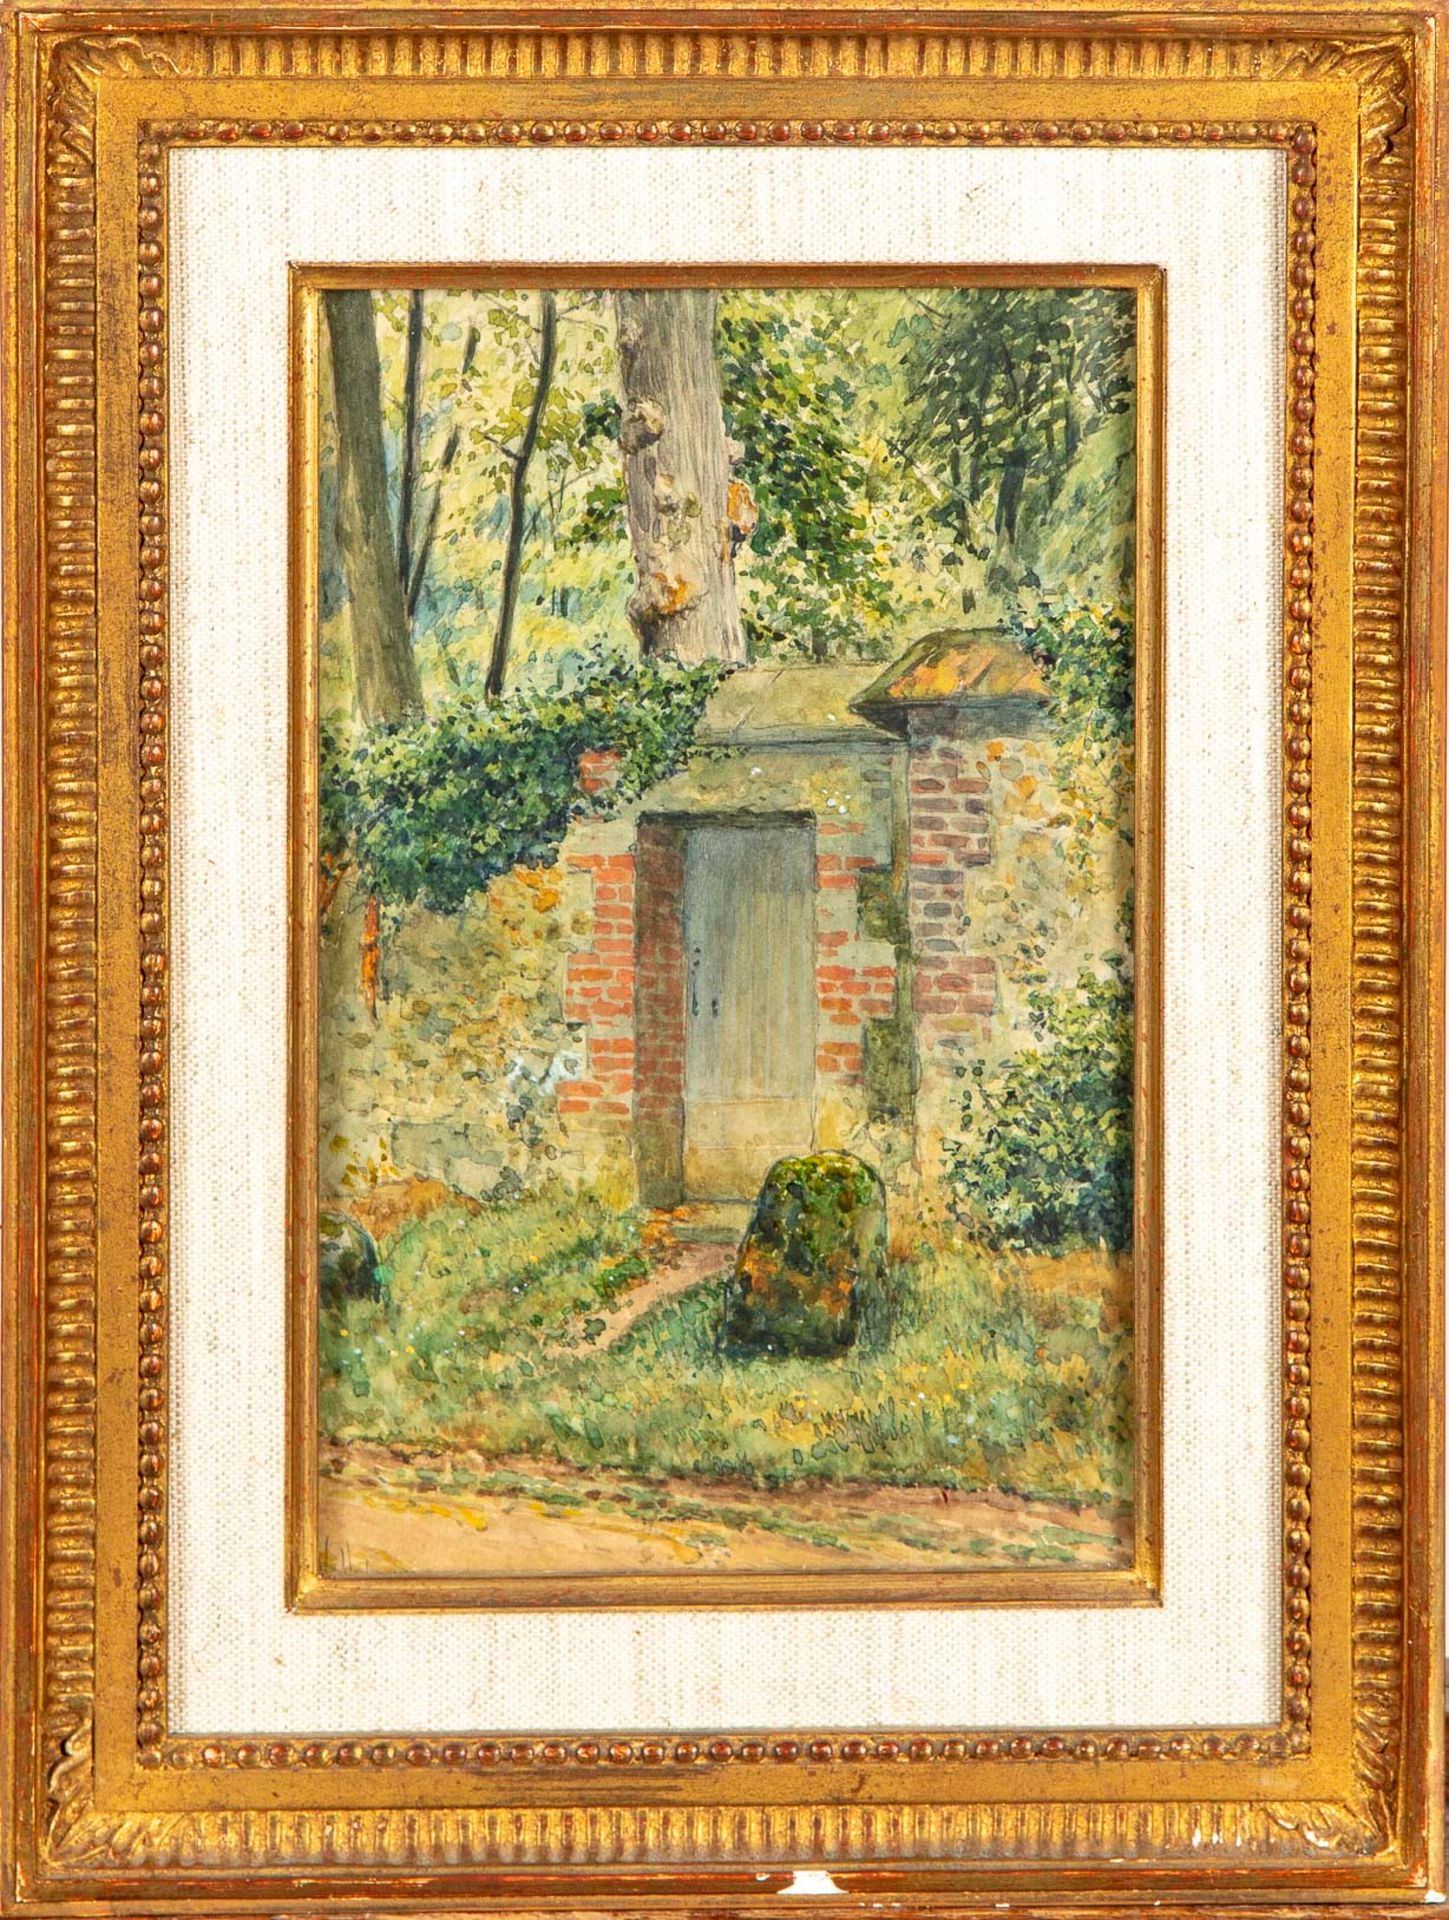 Louis VALLET 路易斯-瓦莱特

花园的门

纸上油彩

左下方有签名

23 x 14,5 cm